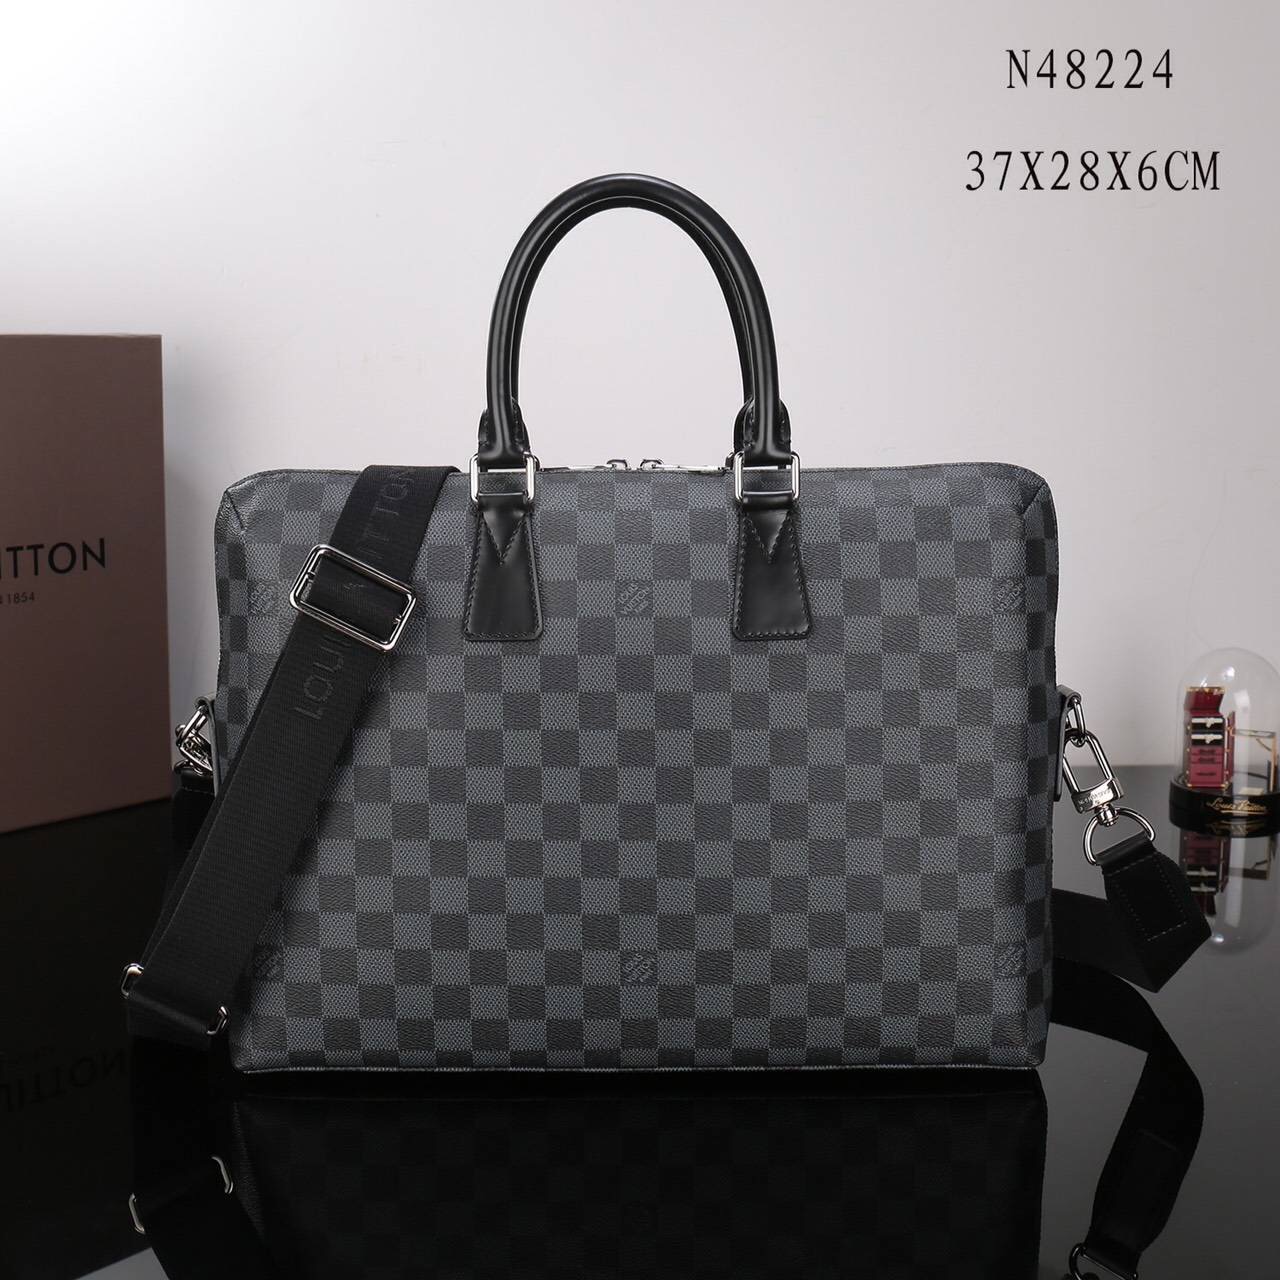 LV Louis Vuitton N48224 Messenger Damier Graphite bags Handbags